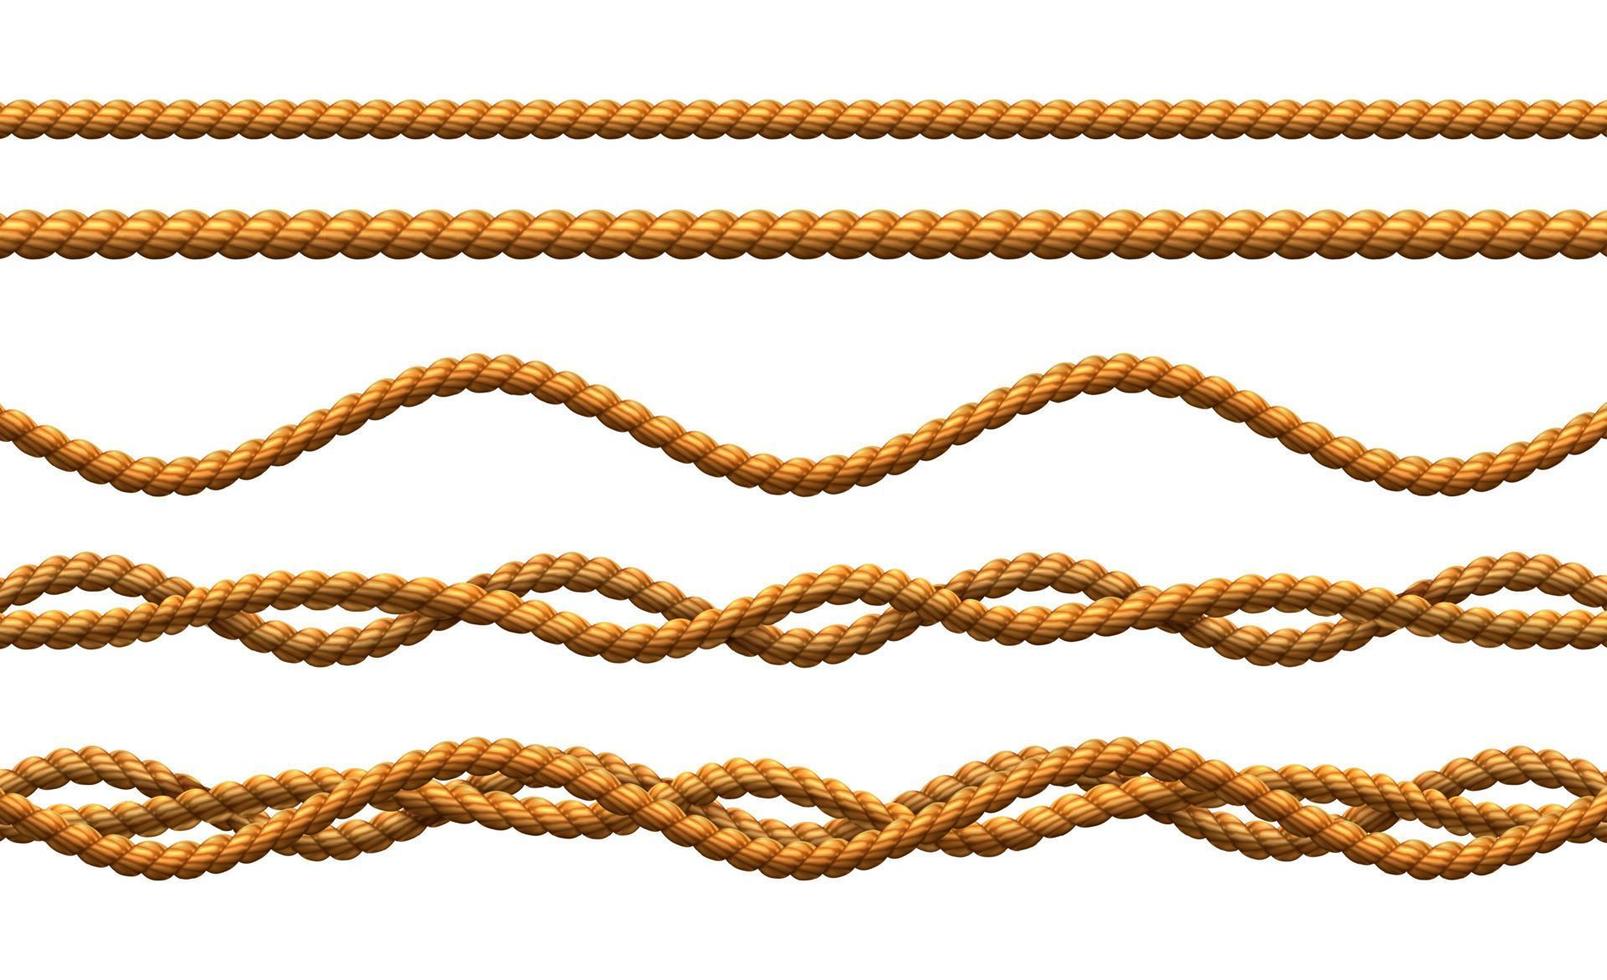 3d realistici modelli di corda vettore senza soluzione di continuità, cavi attorcigliati e ondulati.